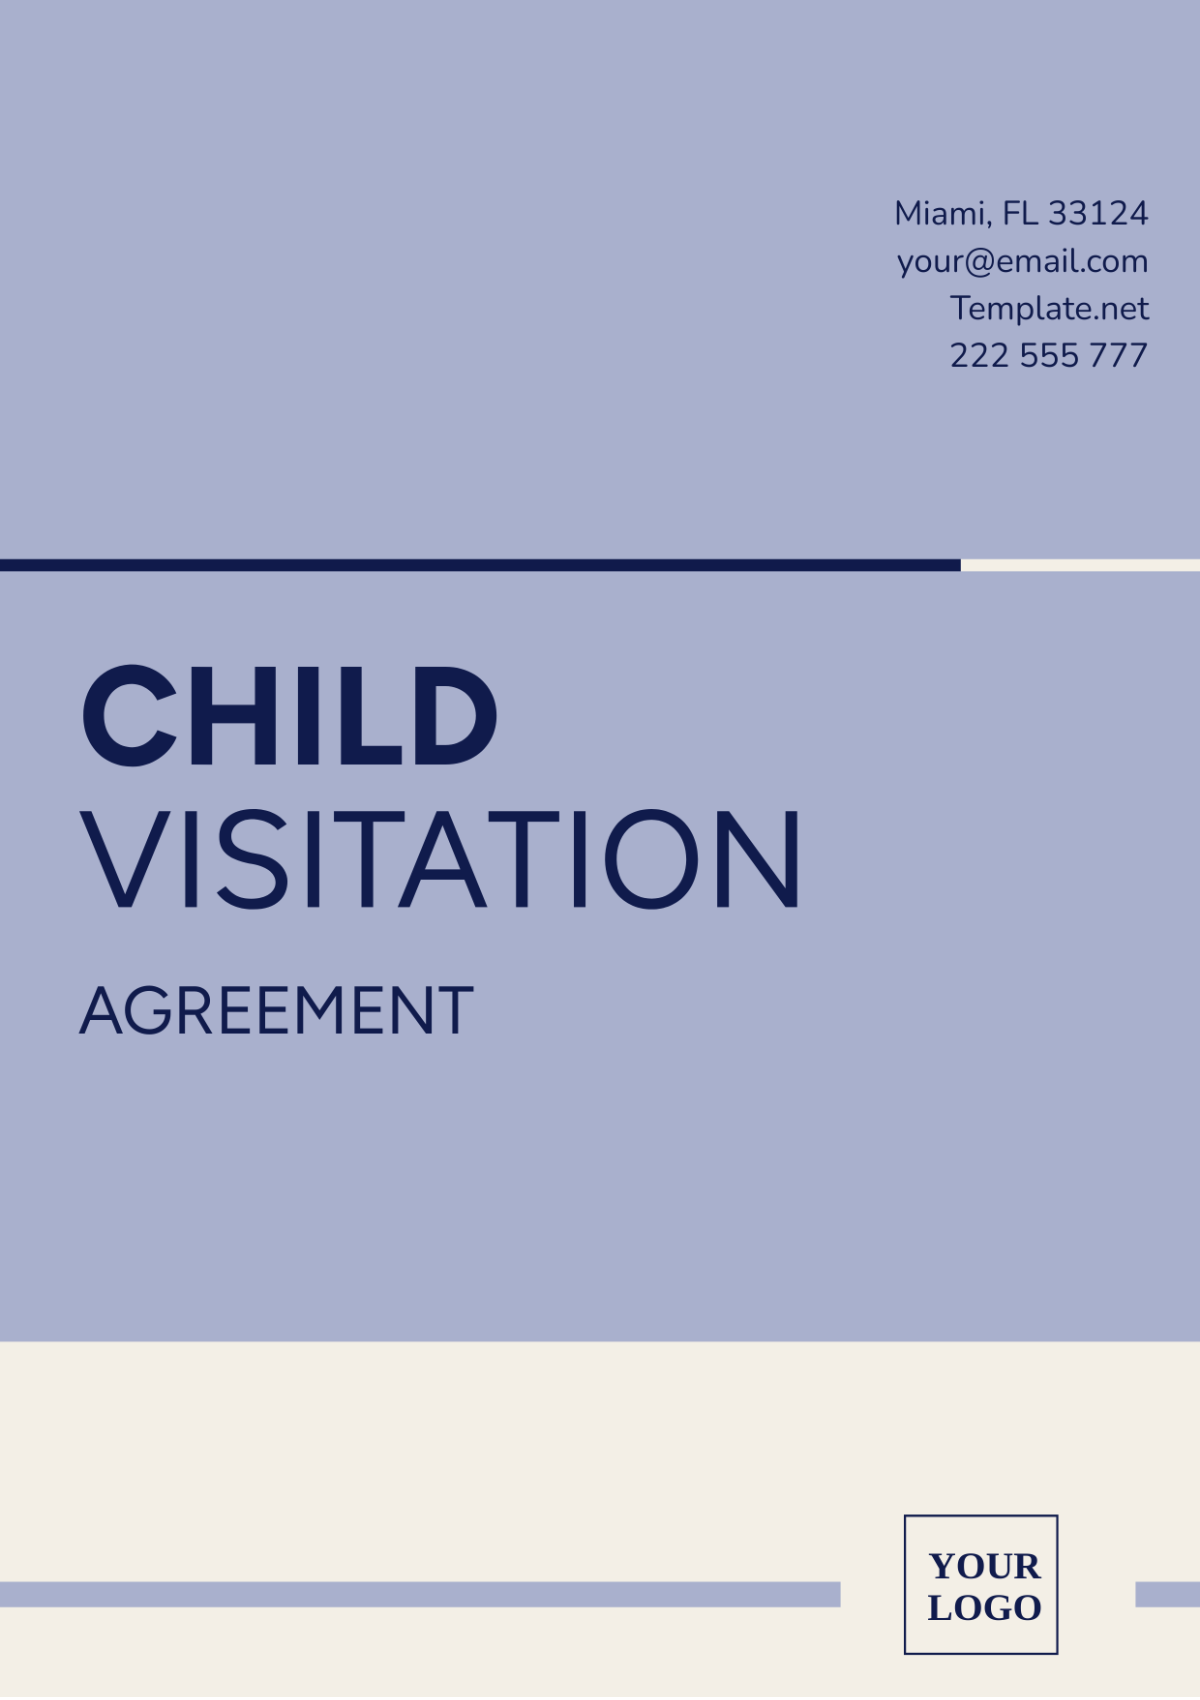 Child Visitation Agreement Template